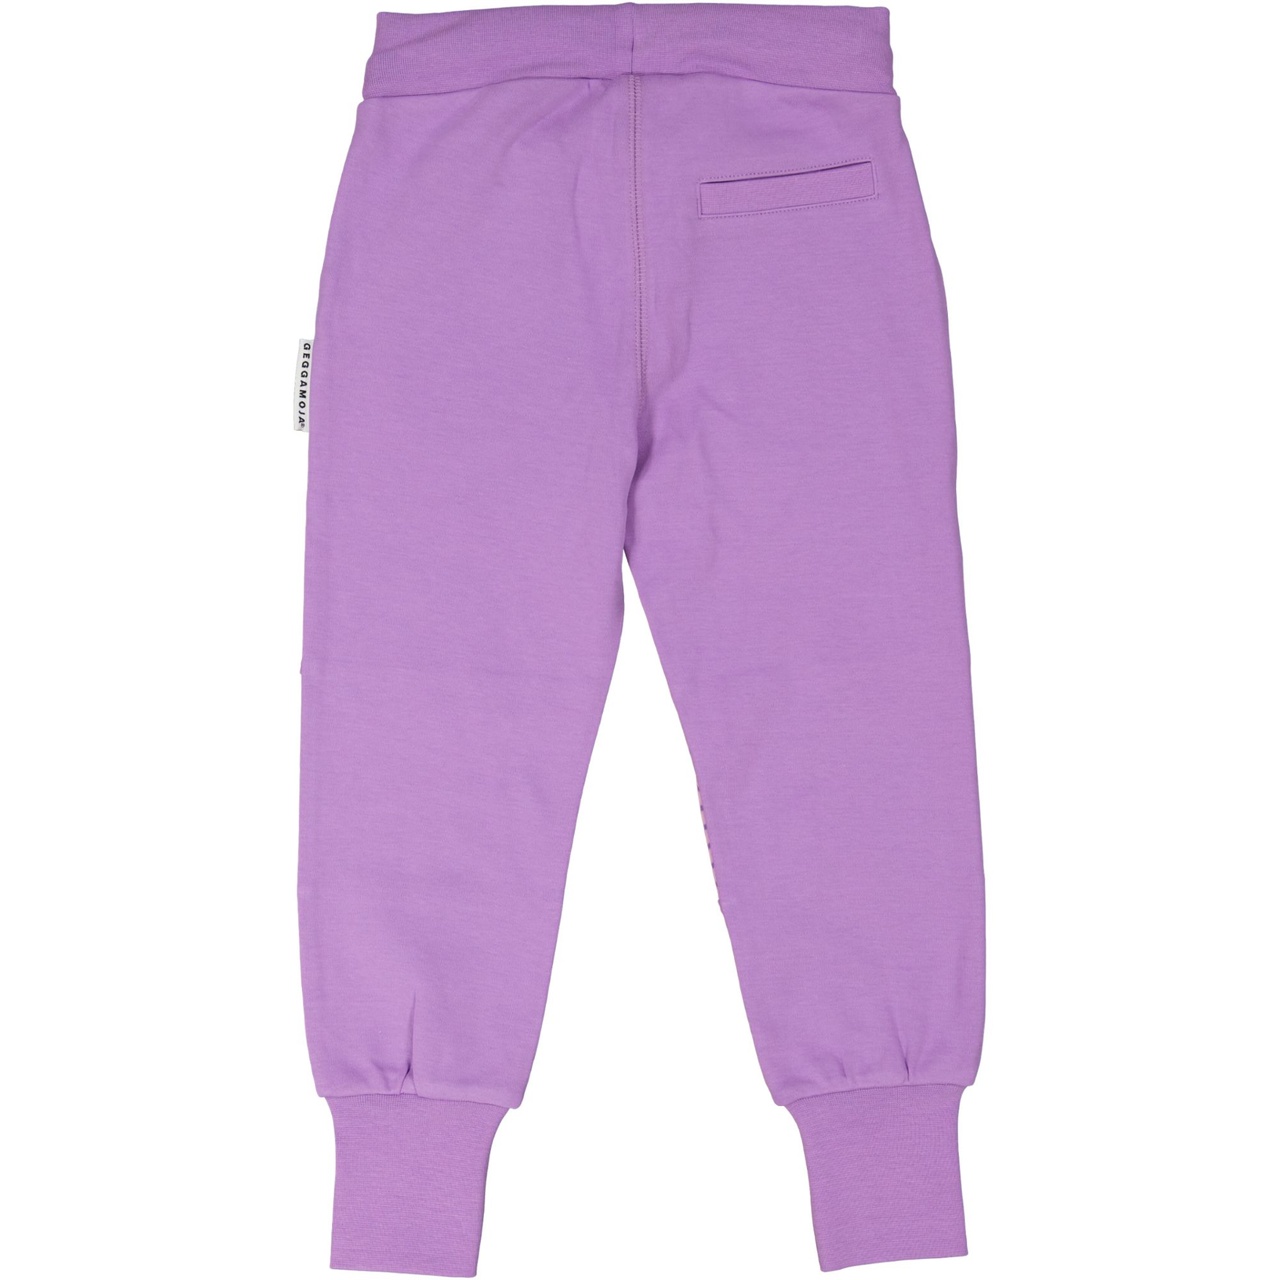 Long pants L.purple/purple  134/140